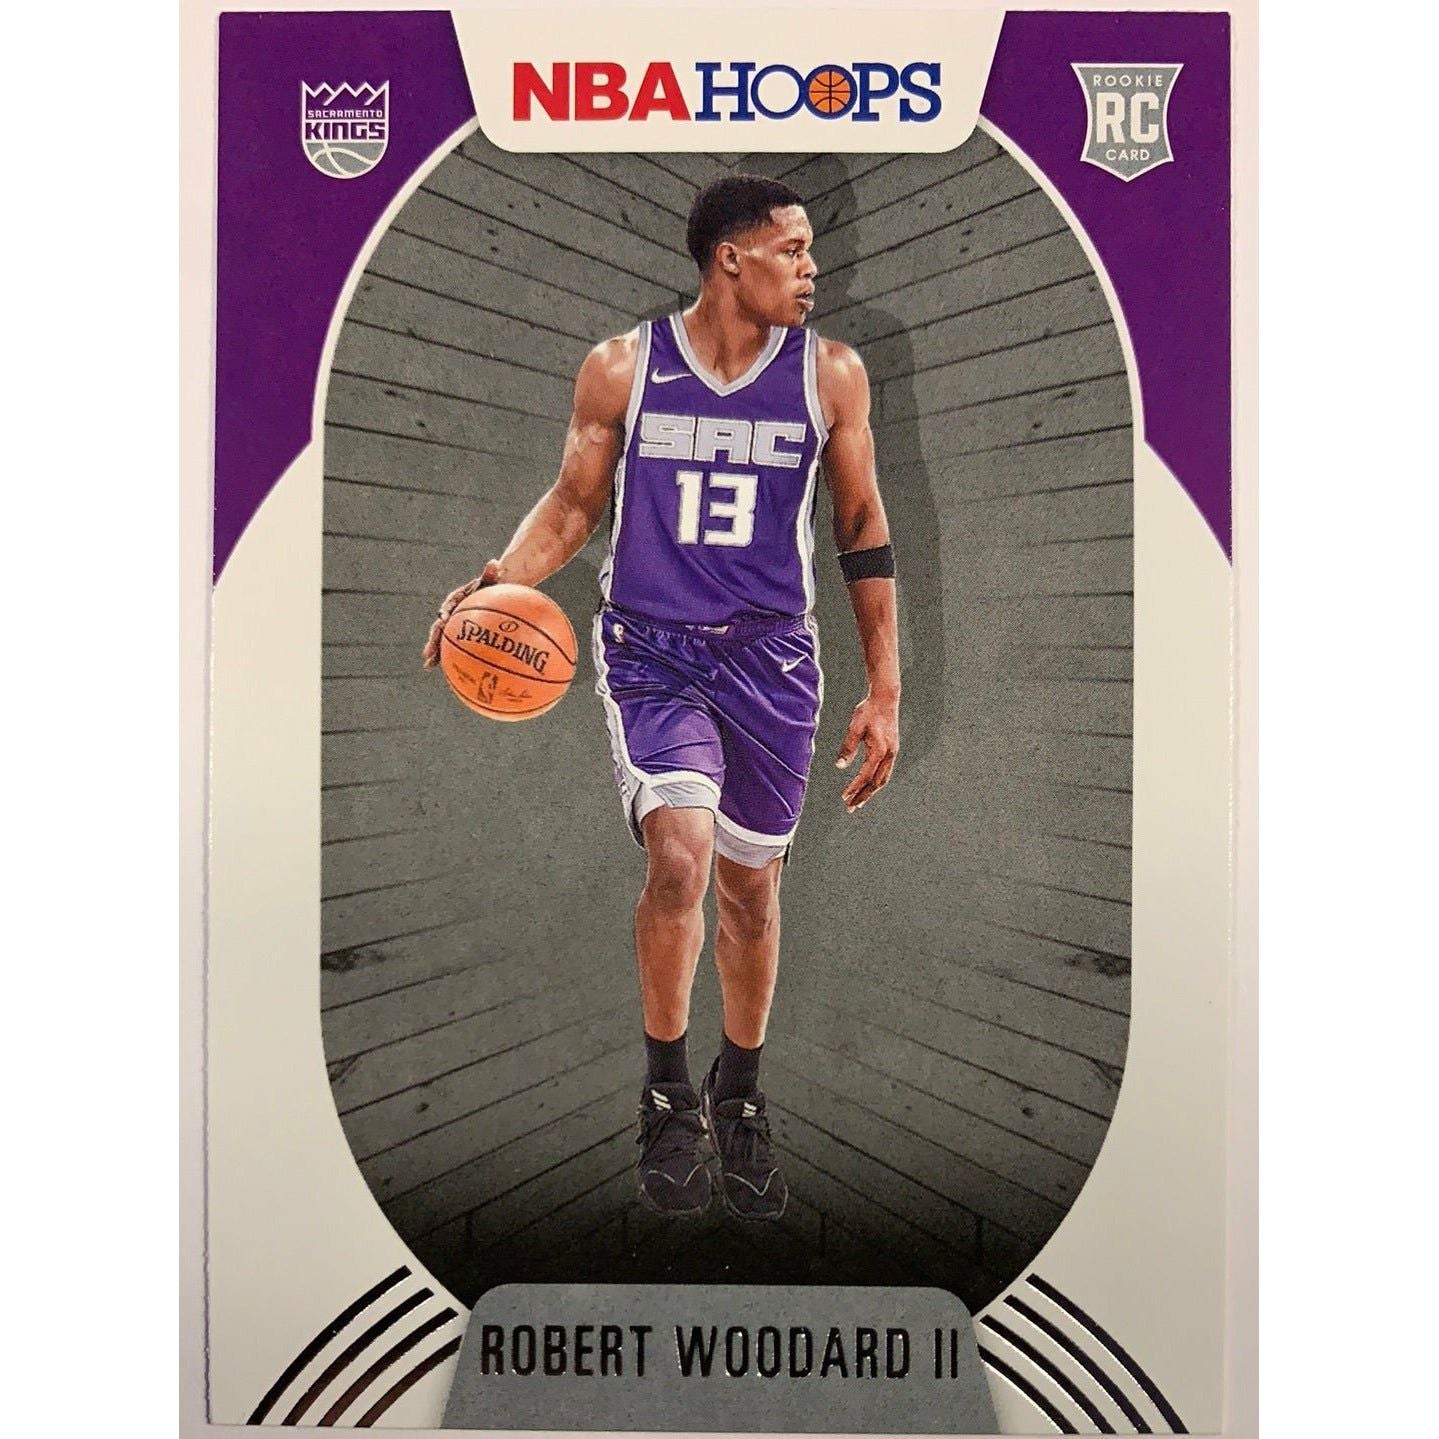  2020-21 Hoops Robert Woodard lll RC  Local Legends Cards & Collectibles